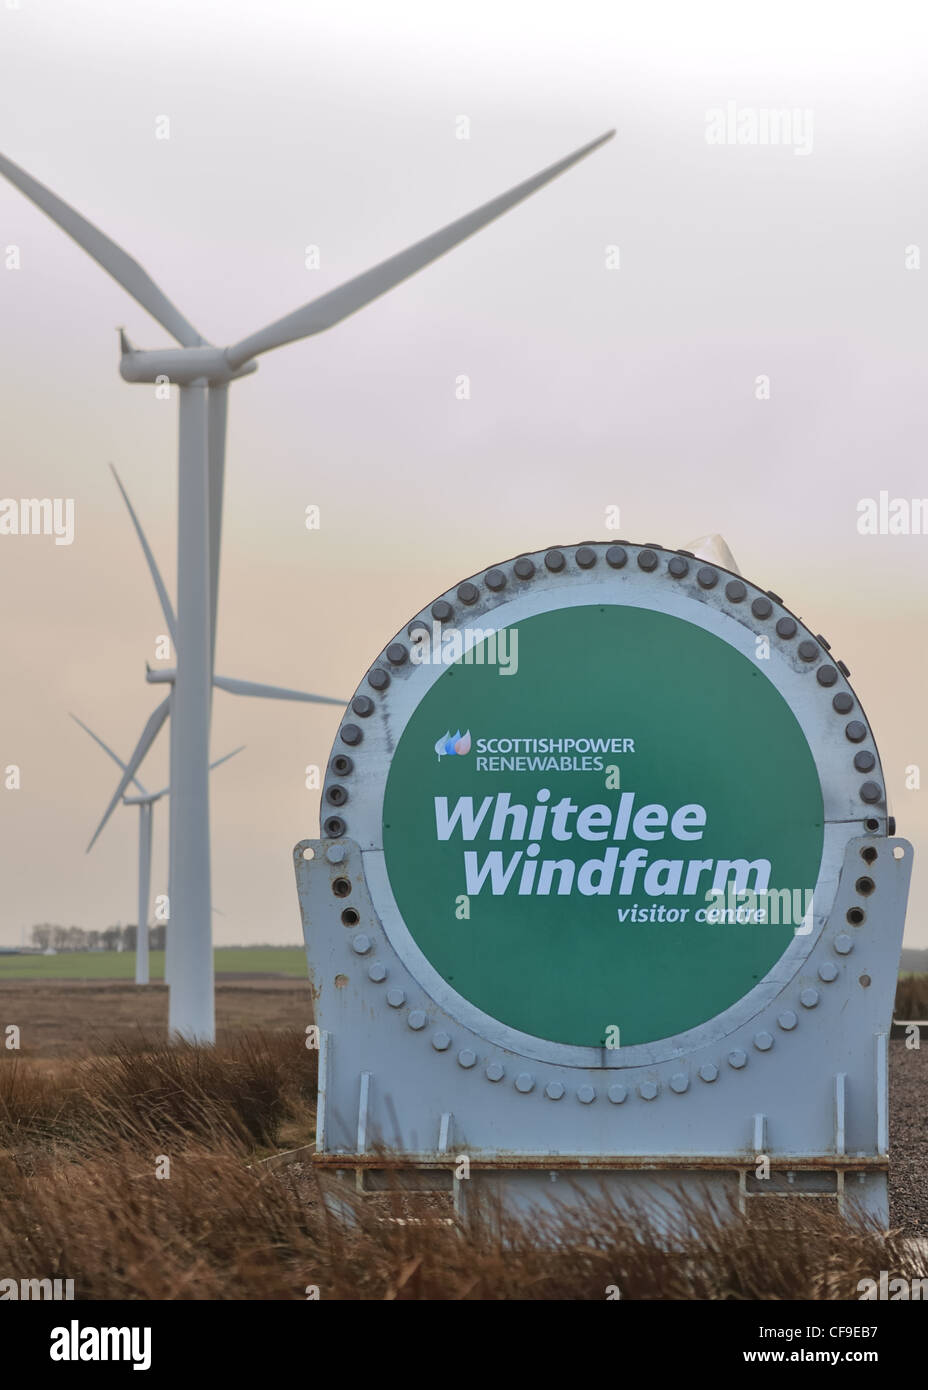 Scottish Power, Whitelee windfarm, renewable energy in Scotland Stock Photo